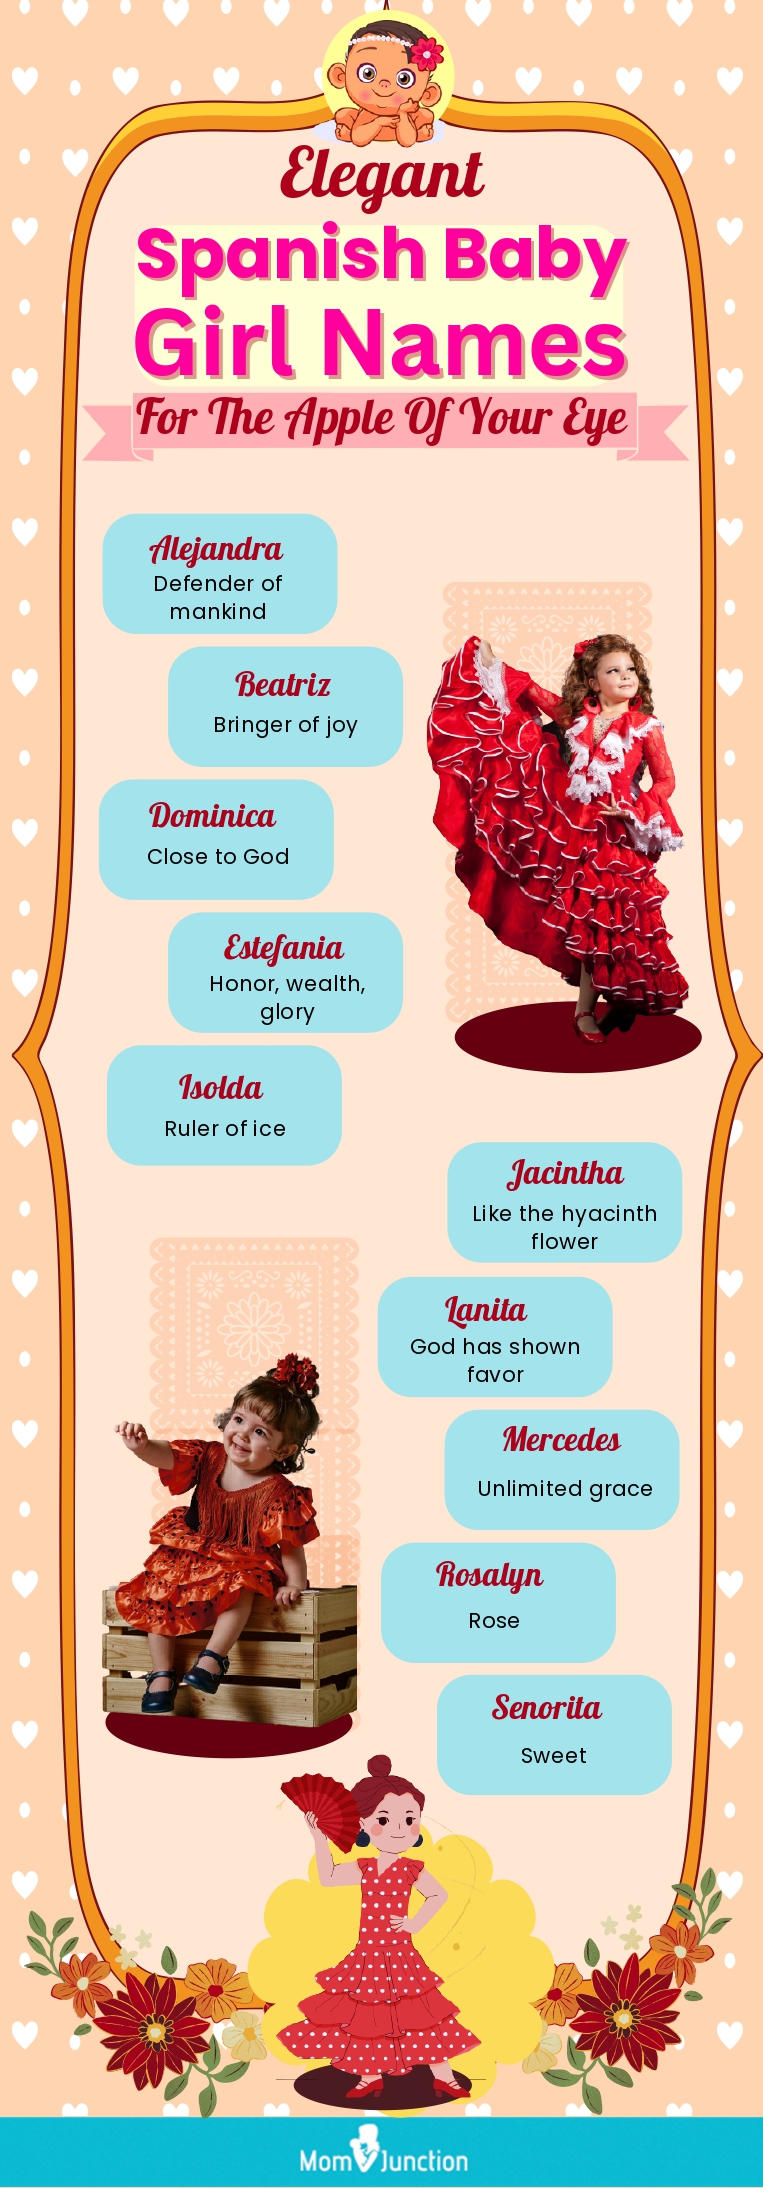 elegant spanish baby girl names for the apple of your eye(infographic)